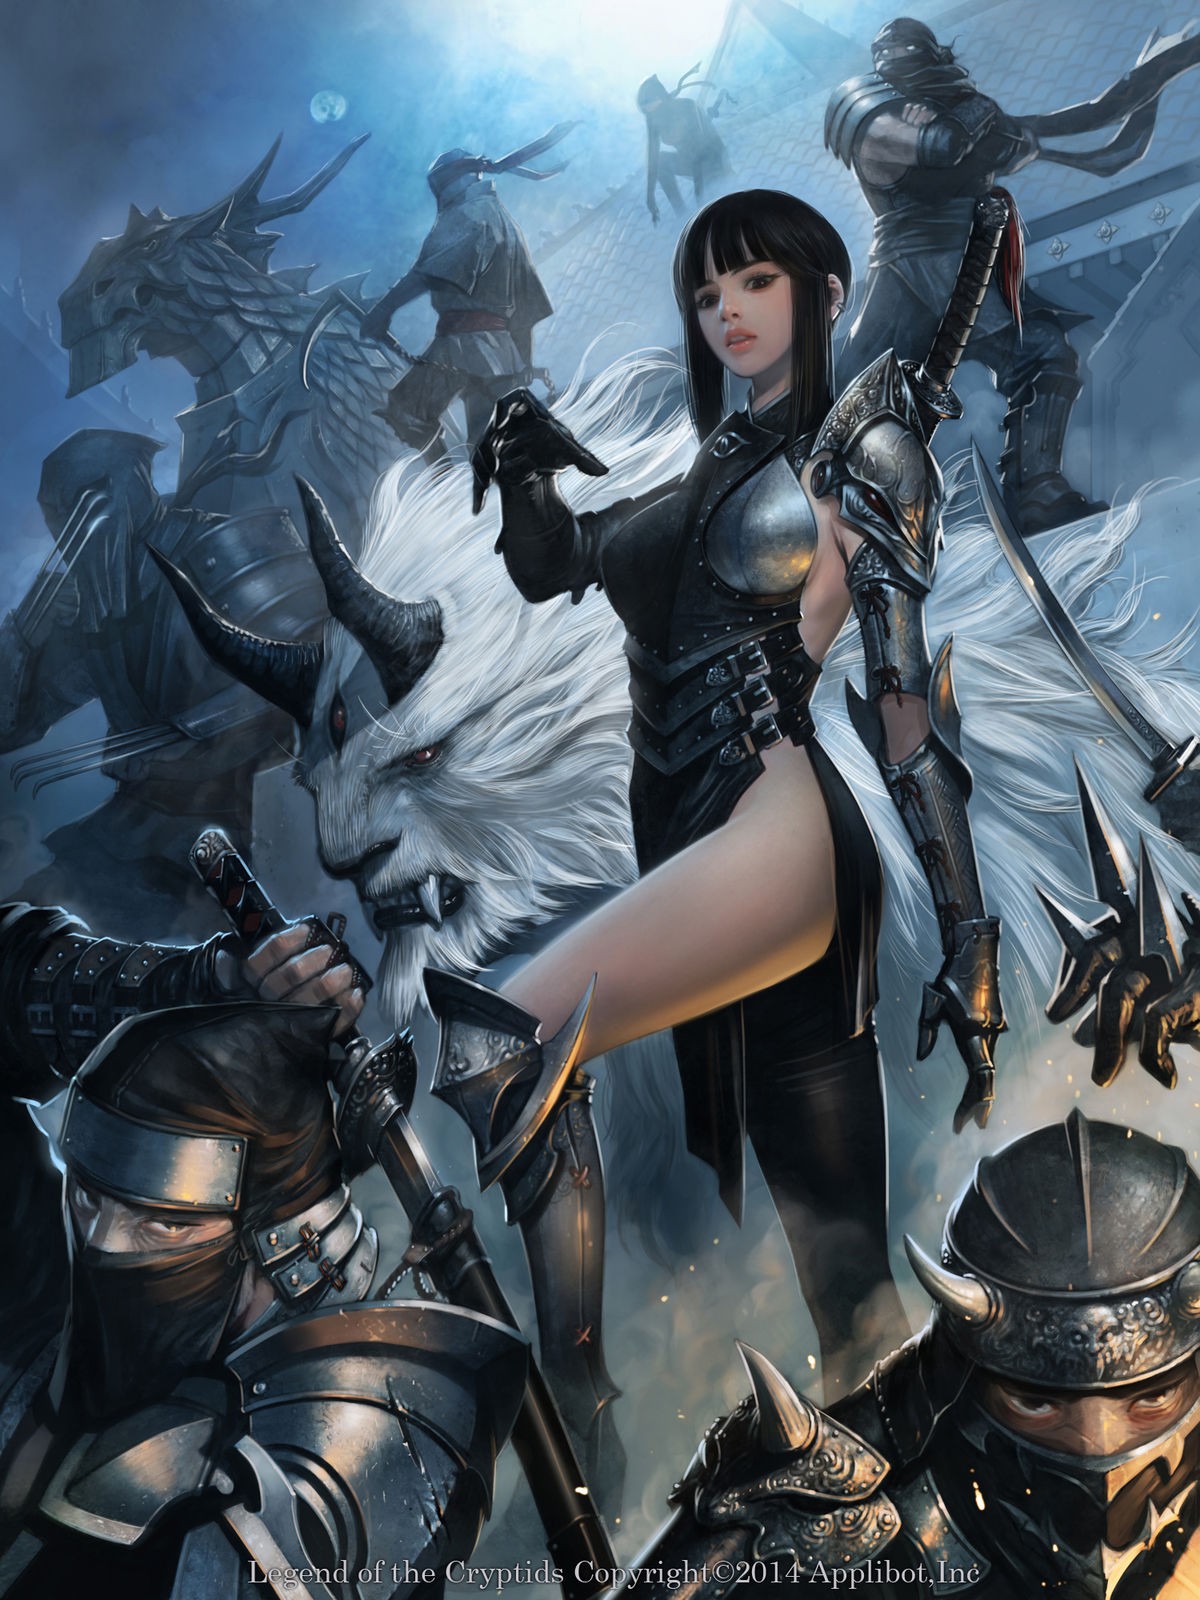 General 1200x1600 gauntlets armor ninjas Legend of the Cryptids fantasy armor black hair Asian women fantasy girl bob cut